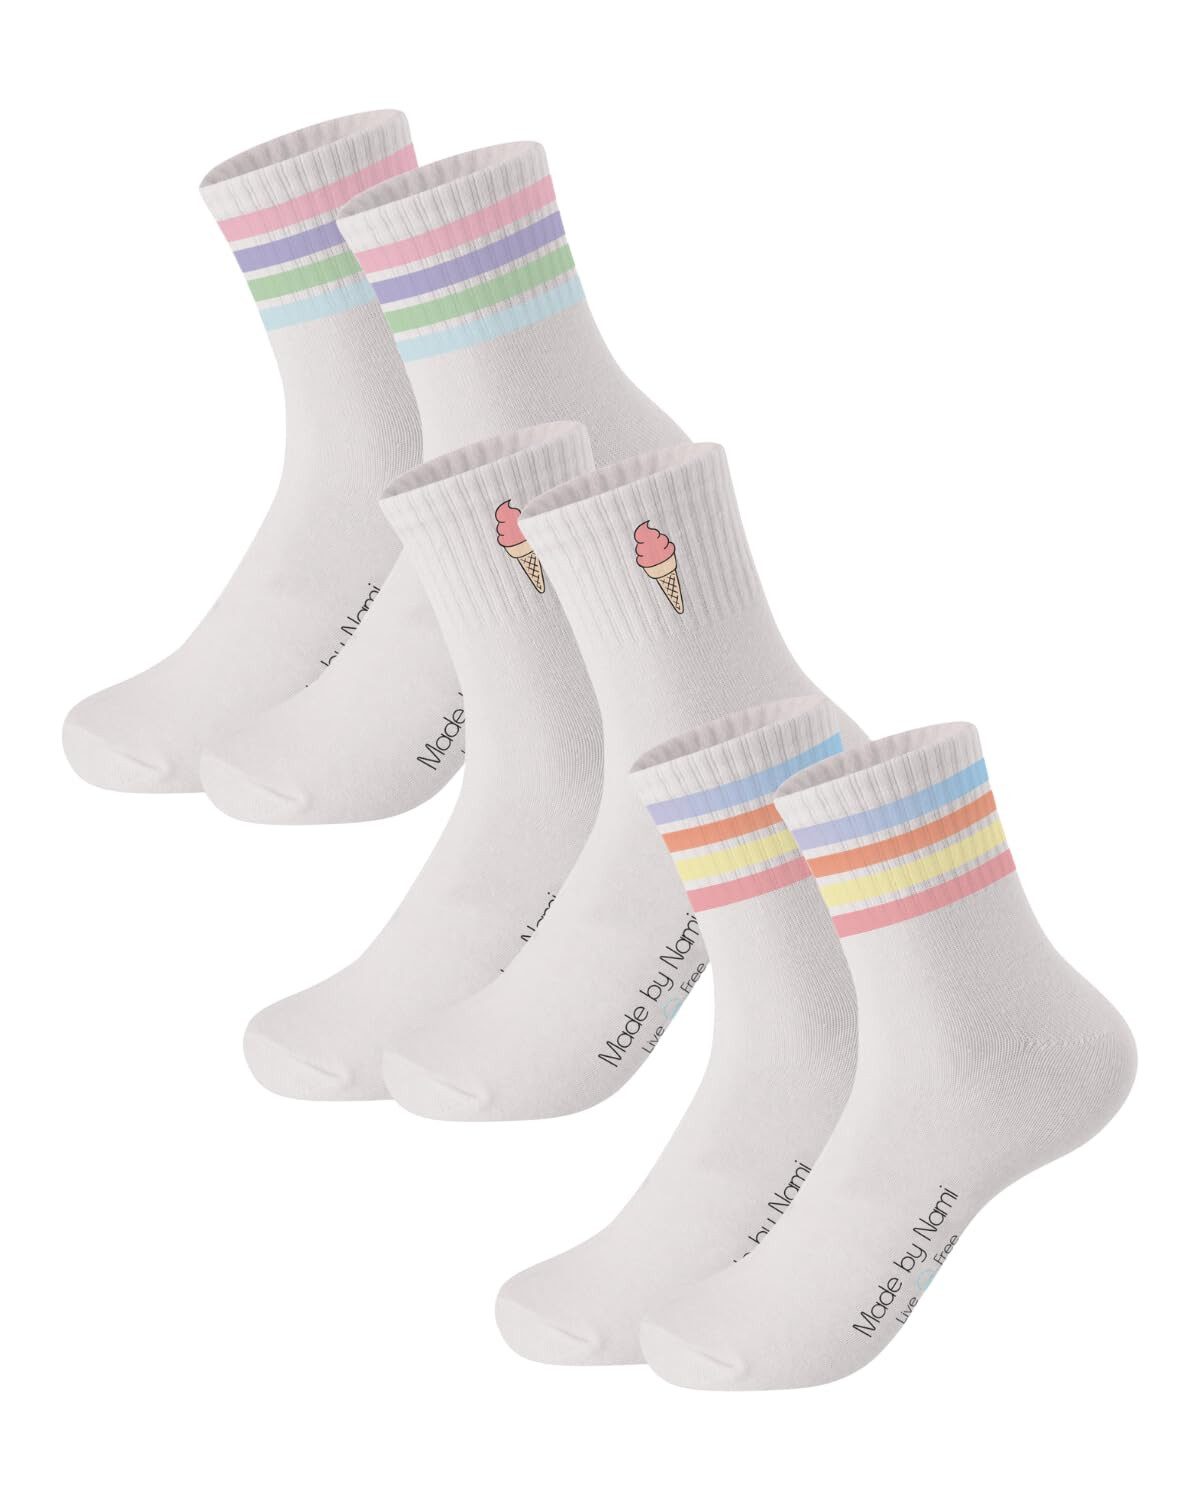 Made by Nami Шкарпетки Crew Socks Tennissocken weiß - Print - Baumwolle (3-Paar) 35-40, atmungsaktiv